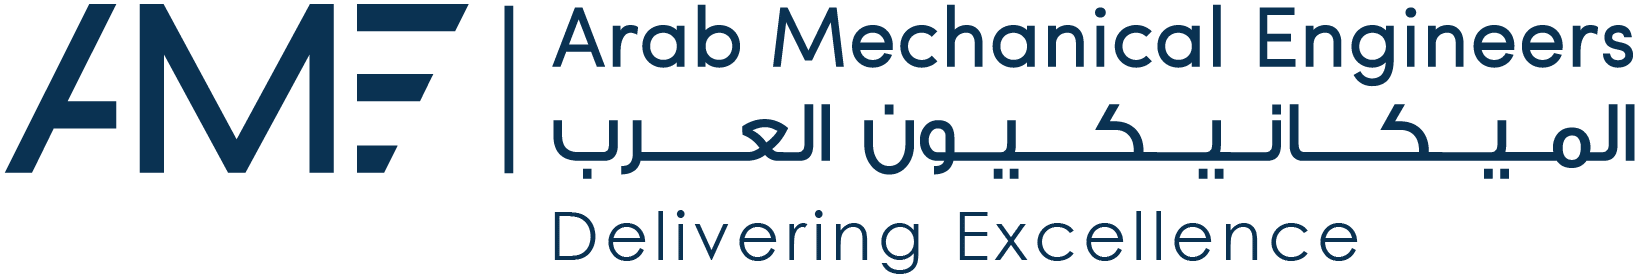 Arab Mechanical